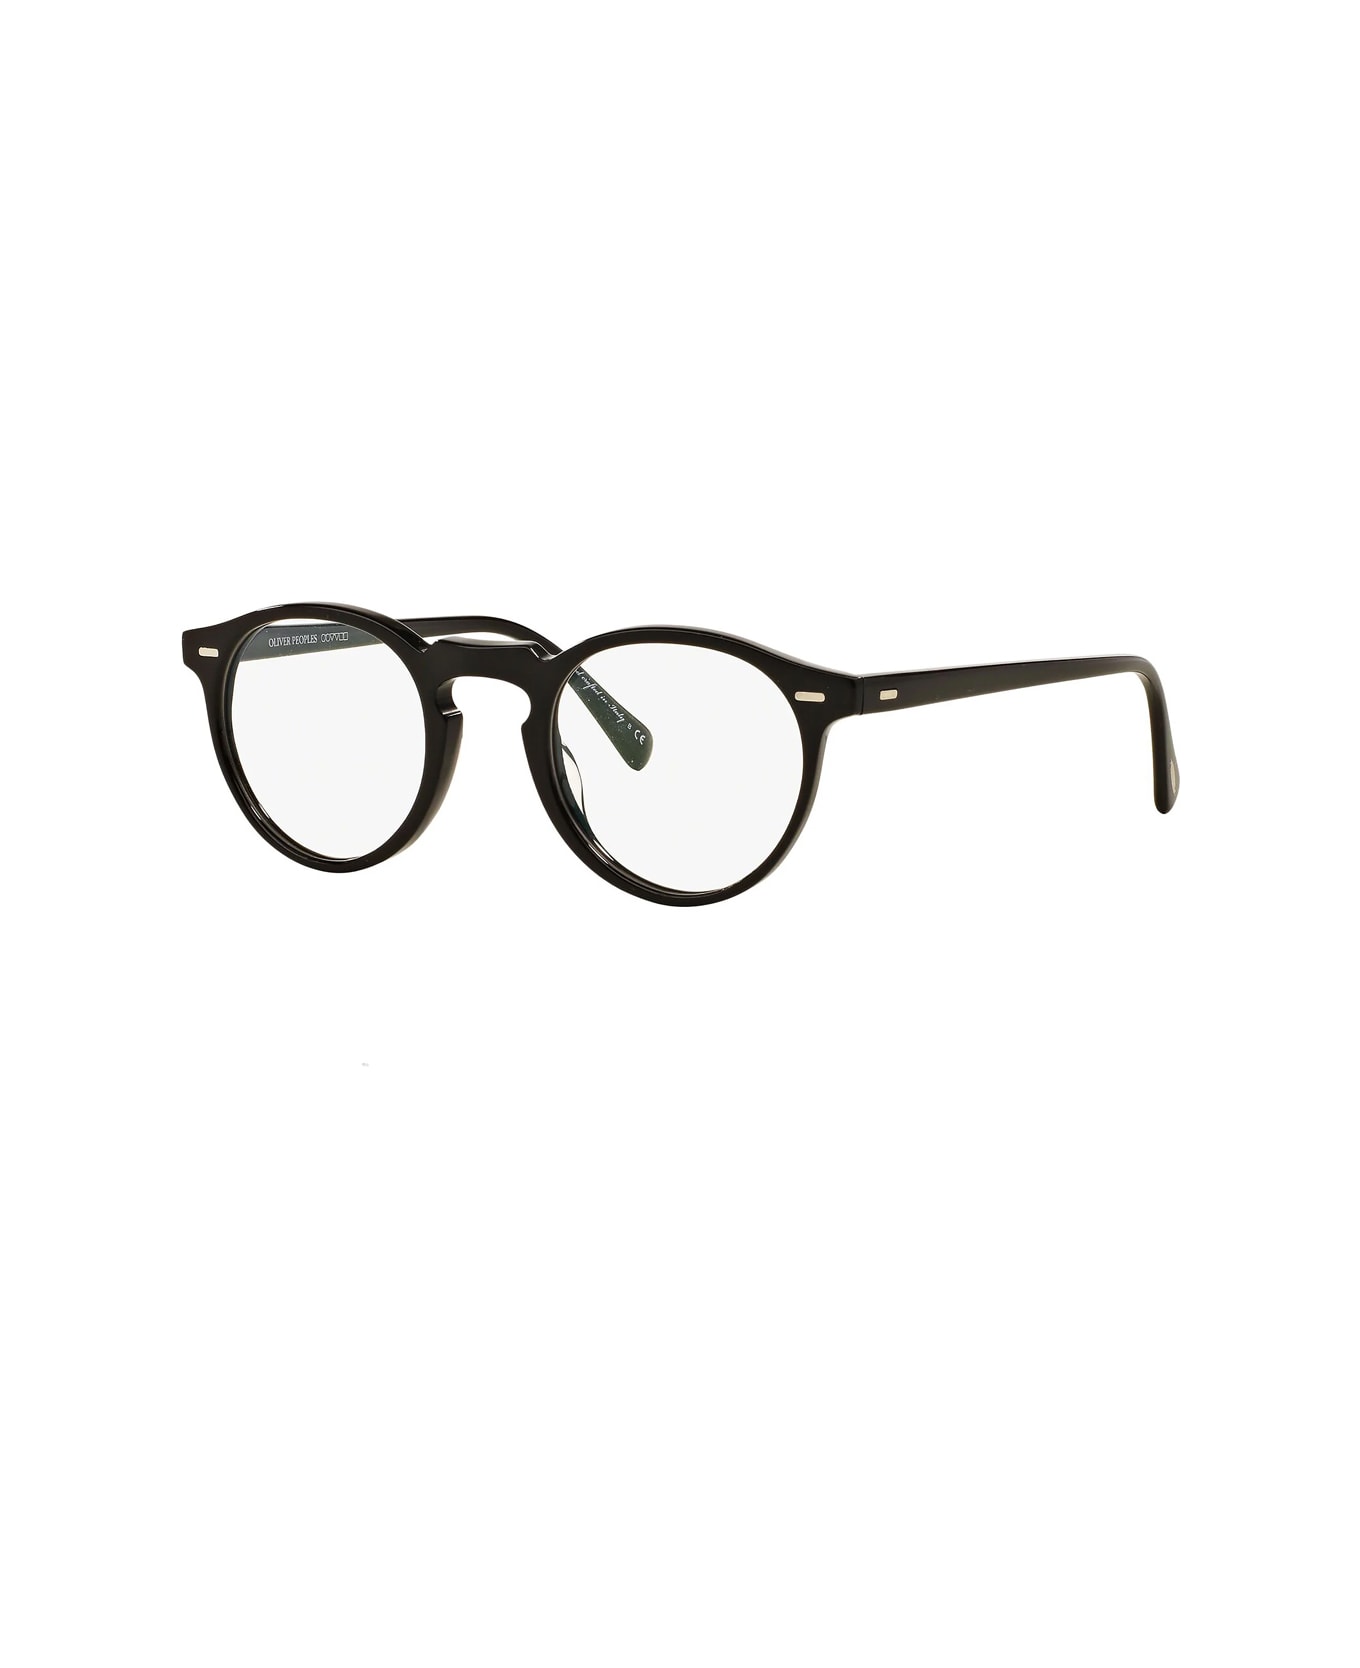 Oliver Peoples Ov5186 - Gregory Peck 1005 Glasses - Nero